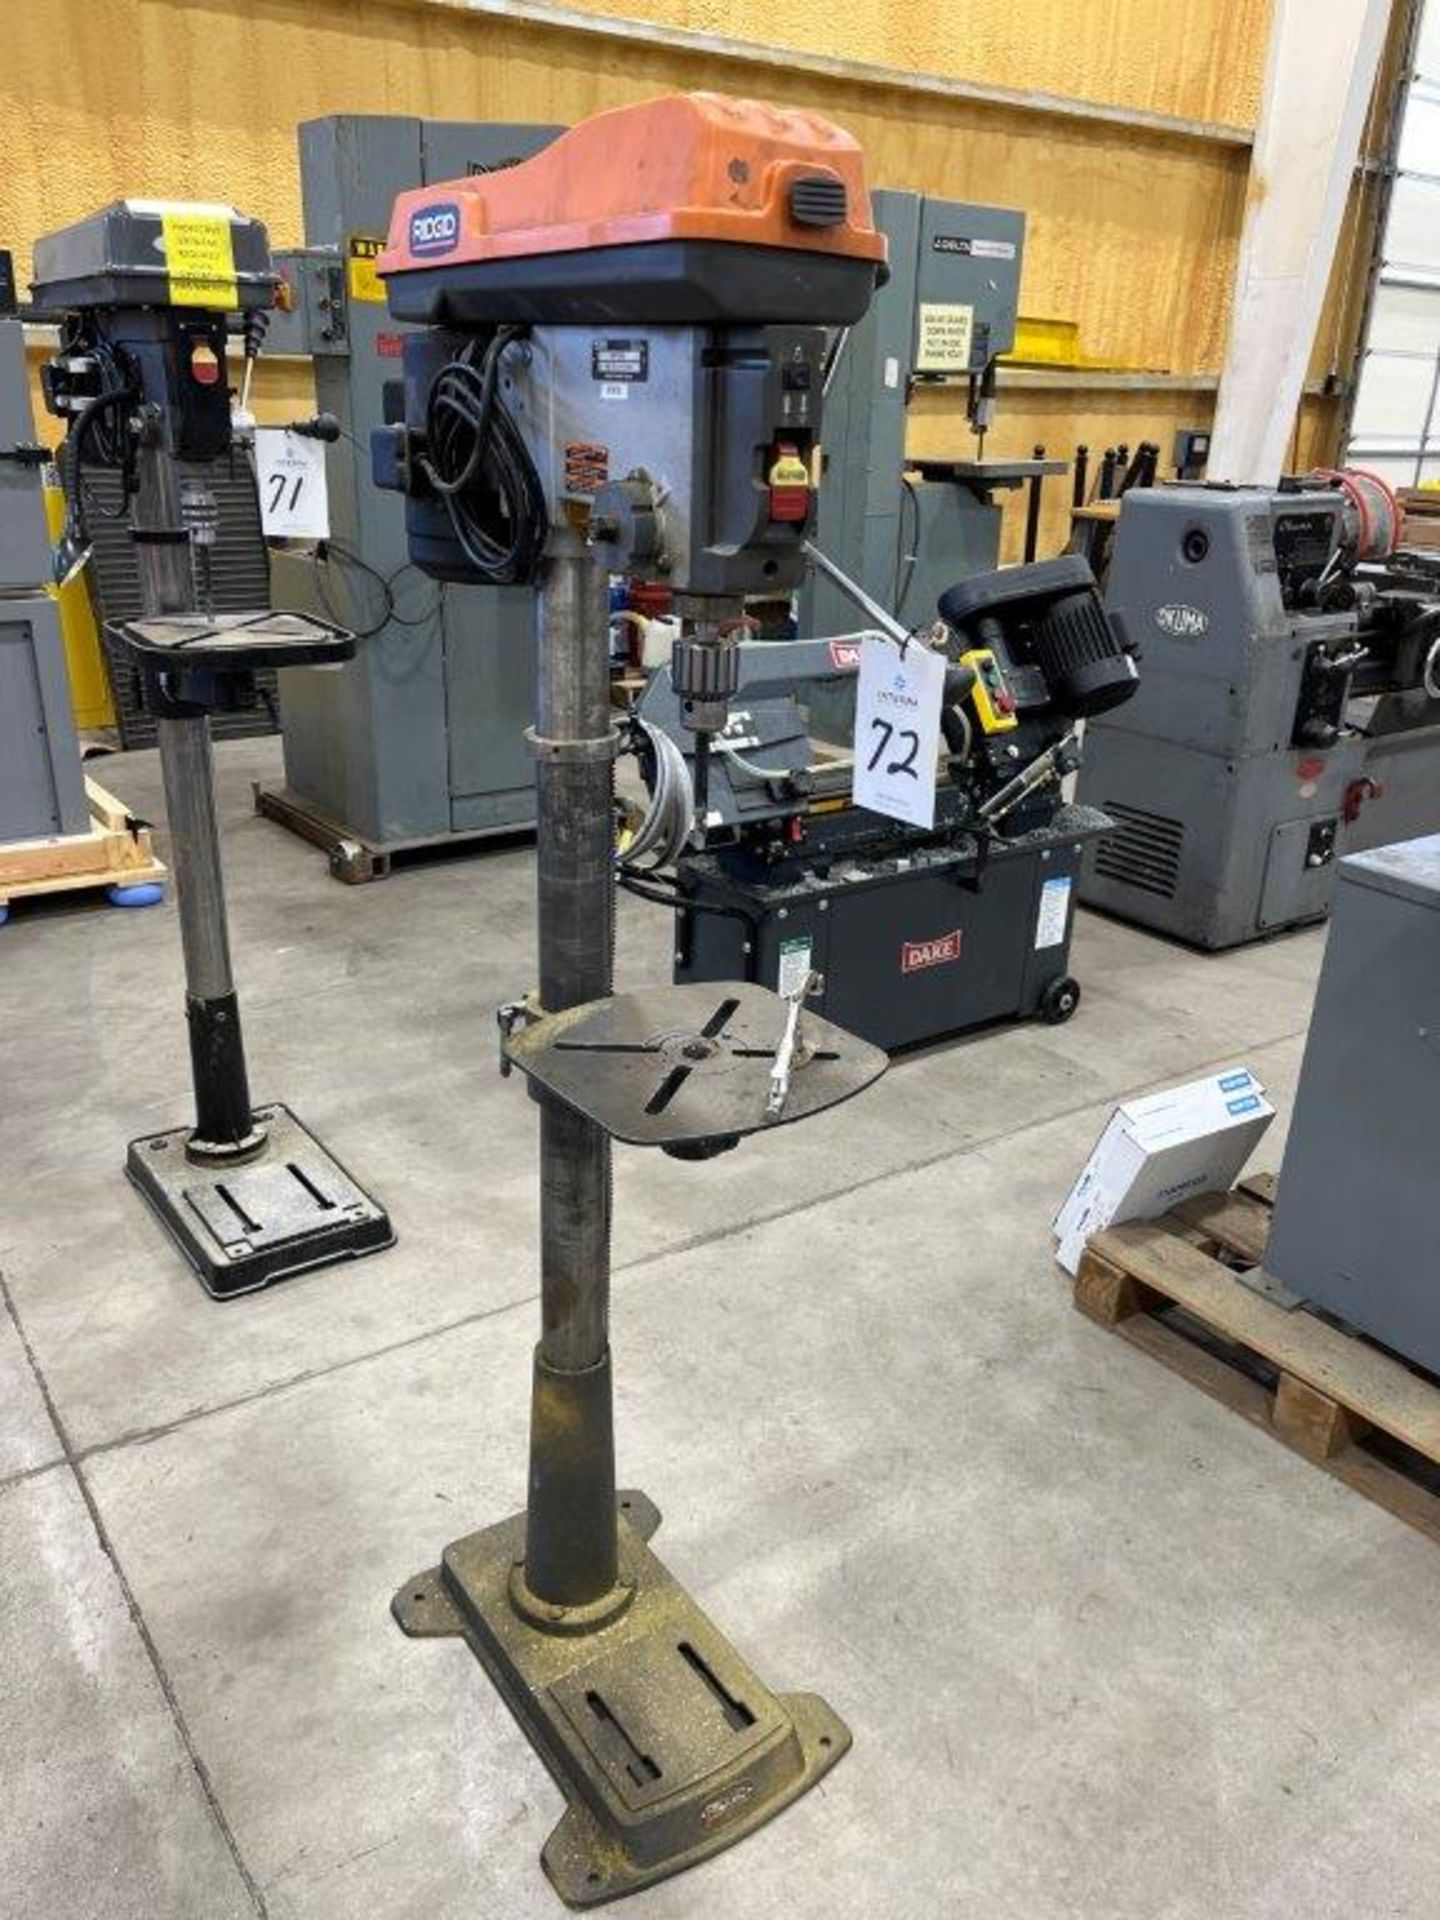 Ridgid DP15501 7" 12 Speed Floor Drill Press